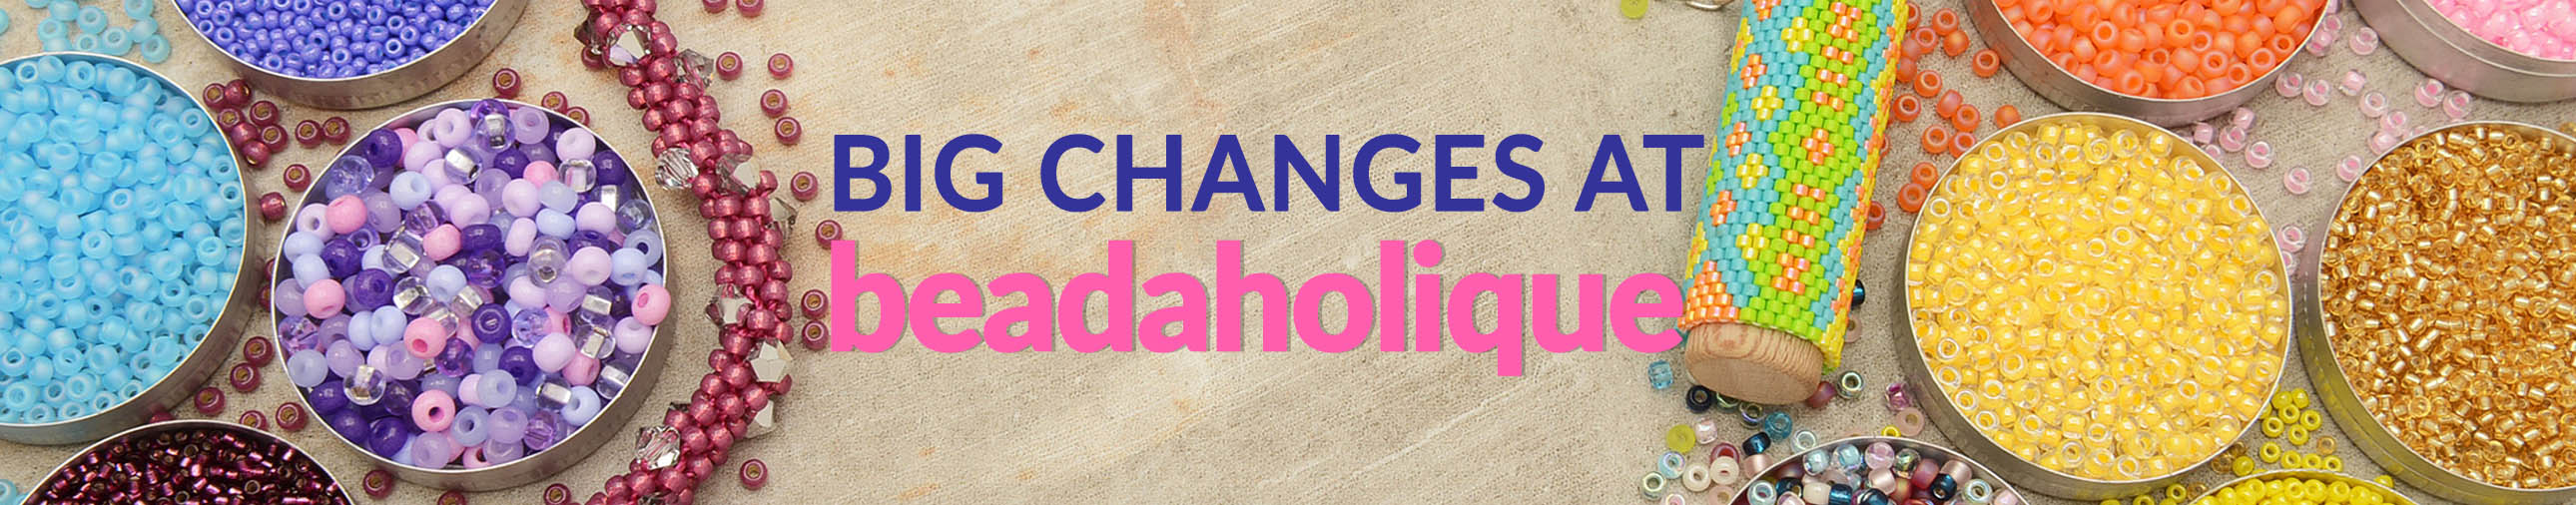 Big Changes at Beadaholique